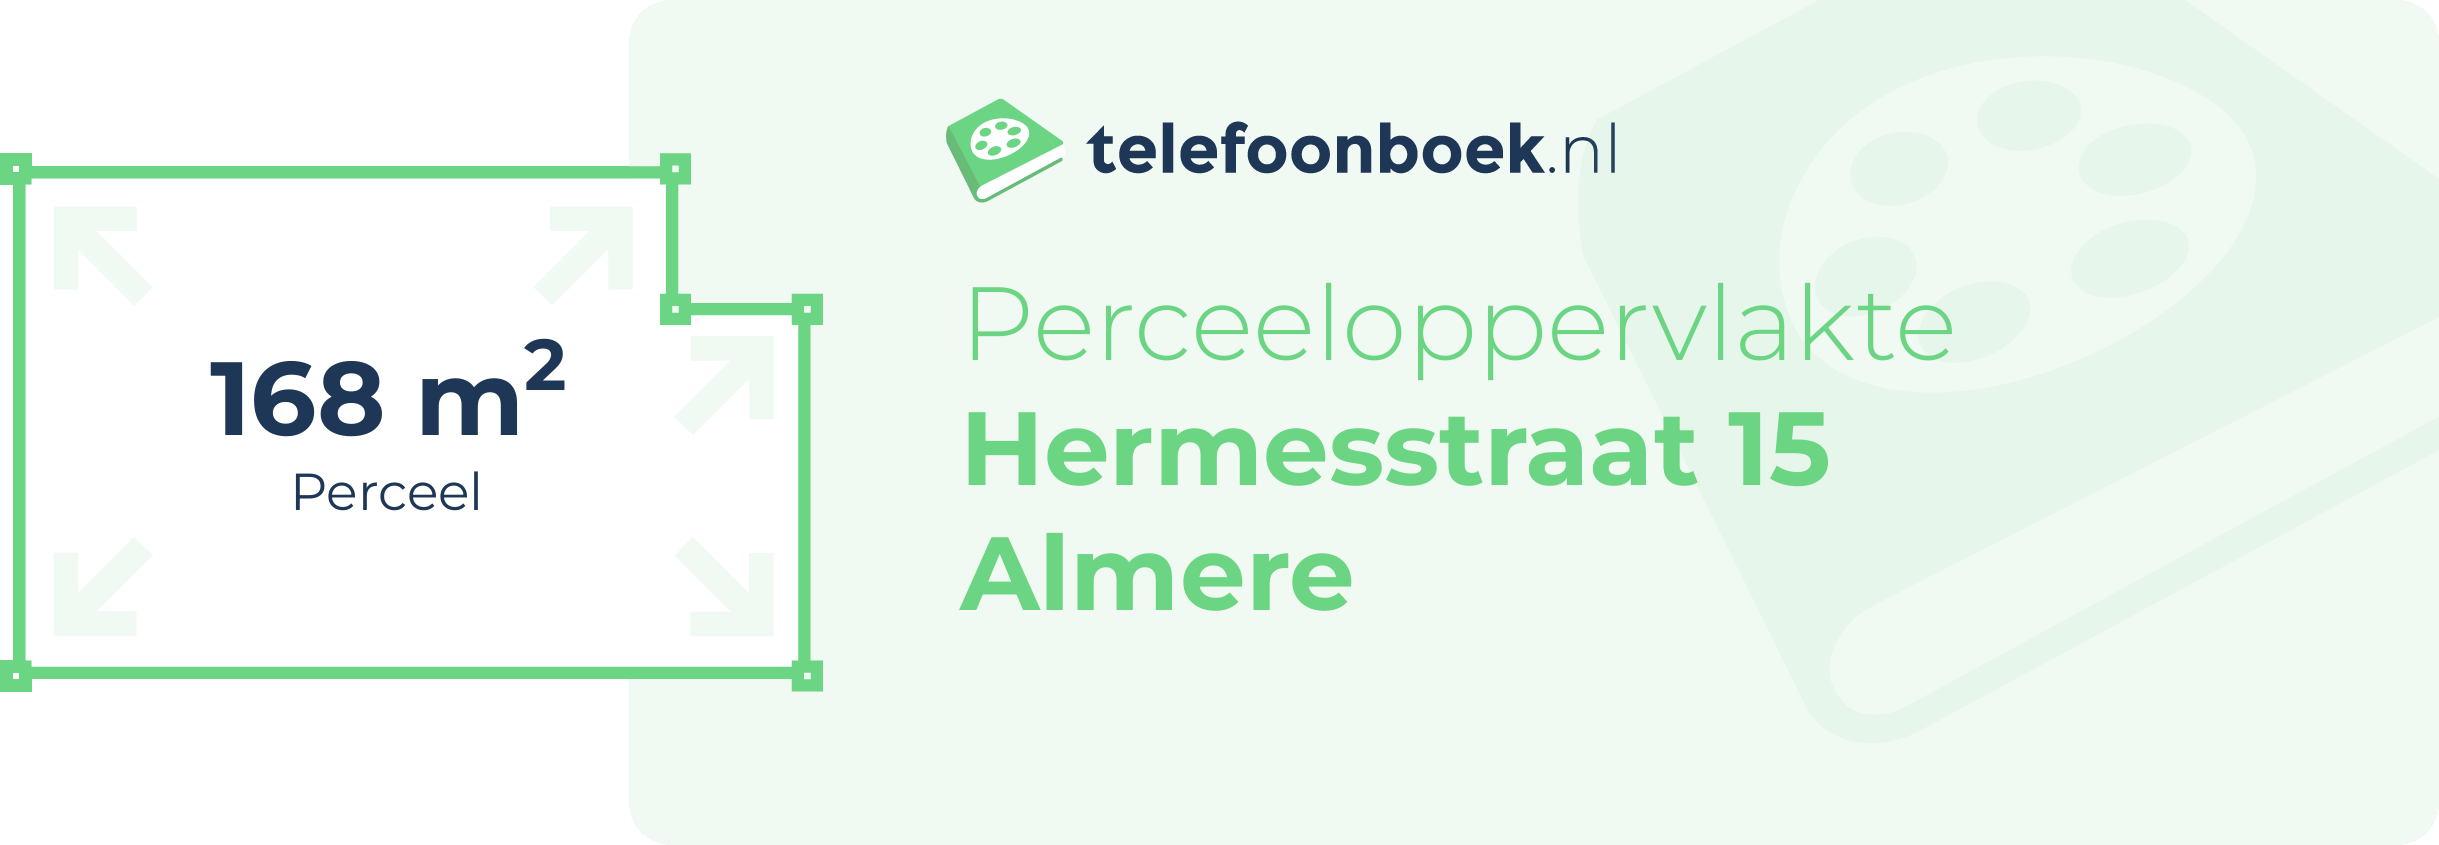 Perceeloppervlakte Hermesstraat 15 Almere